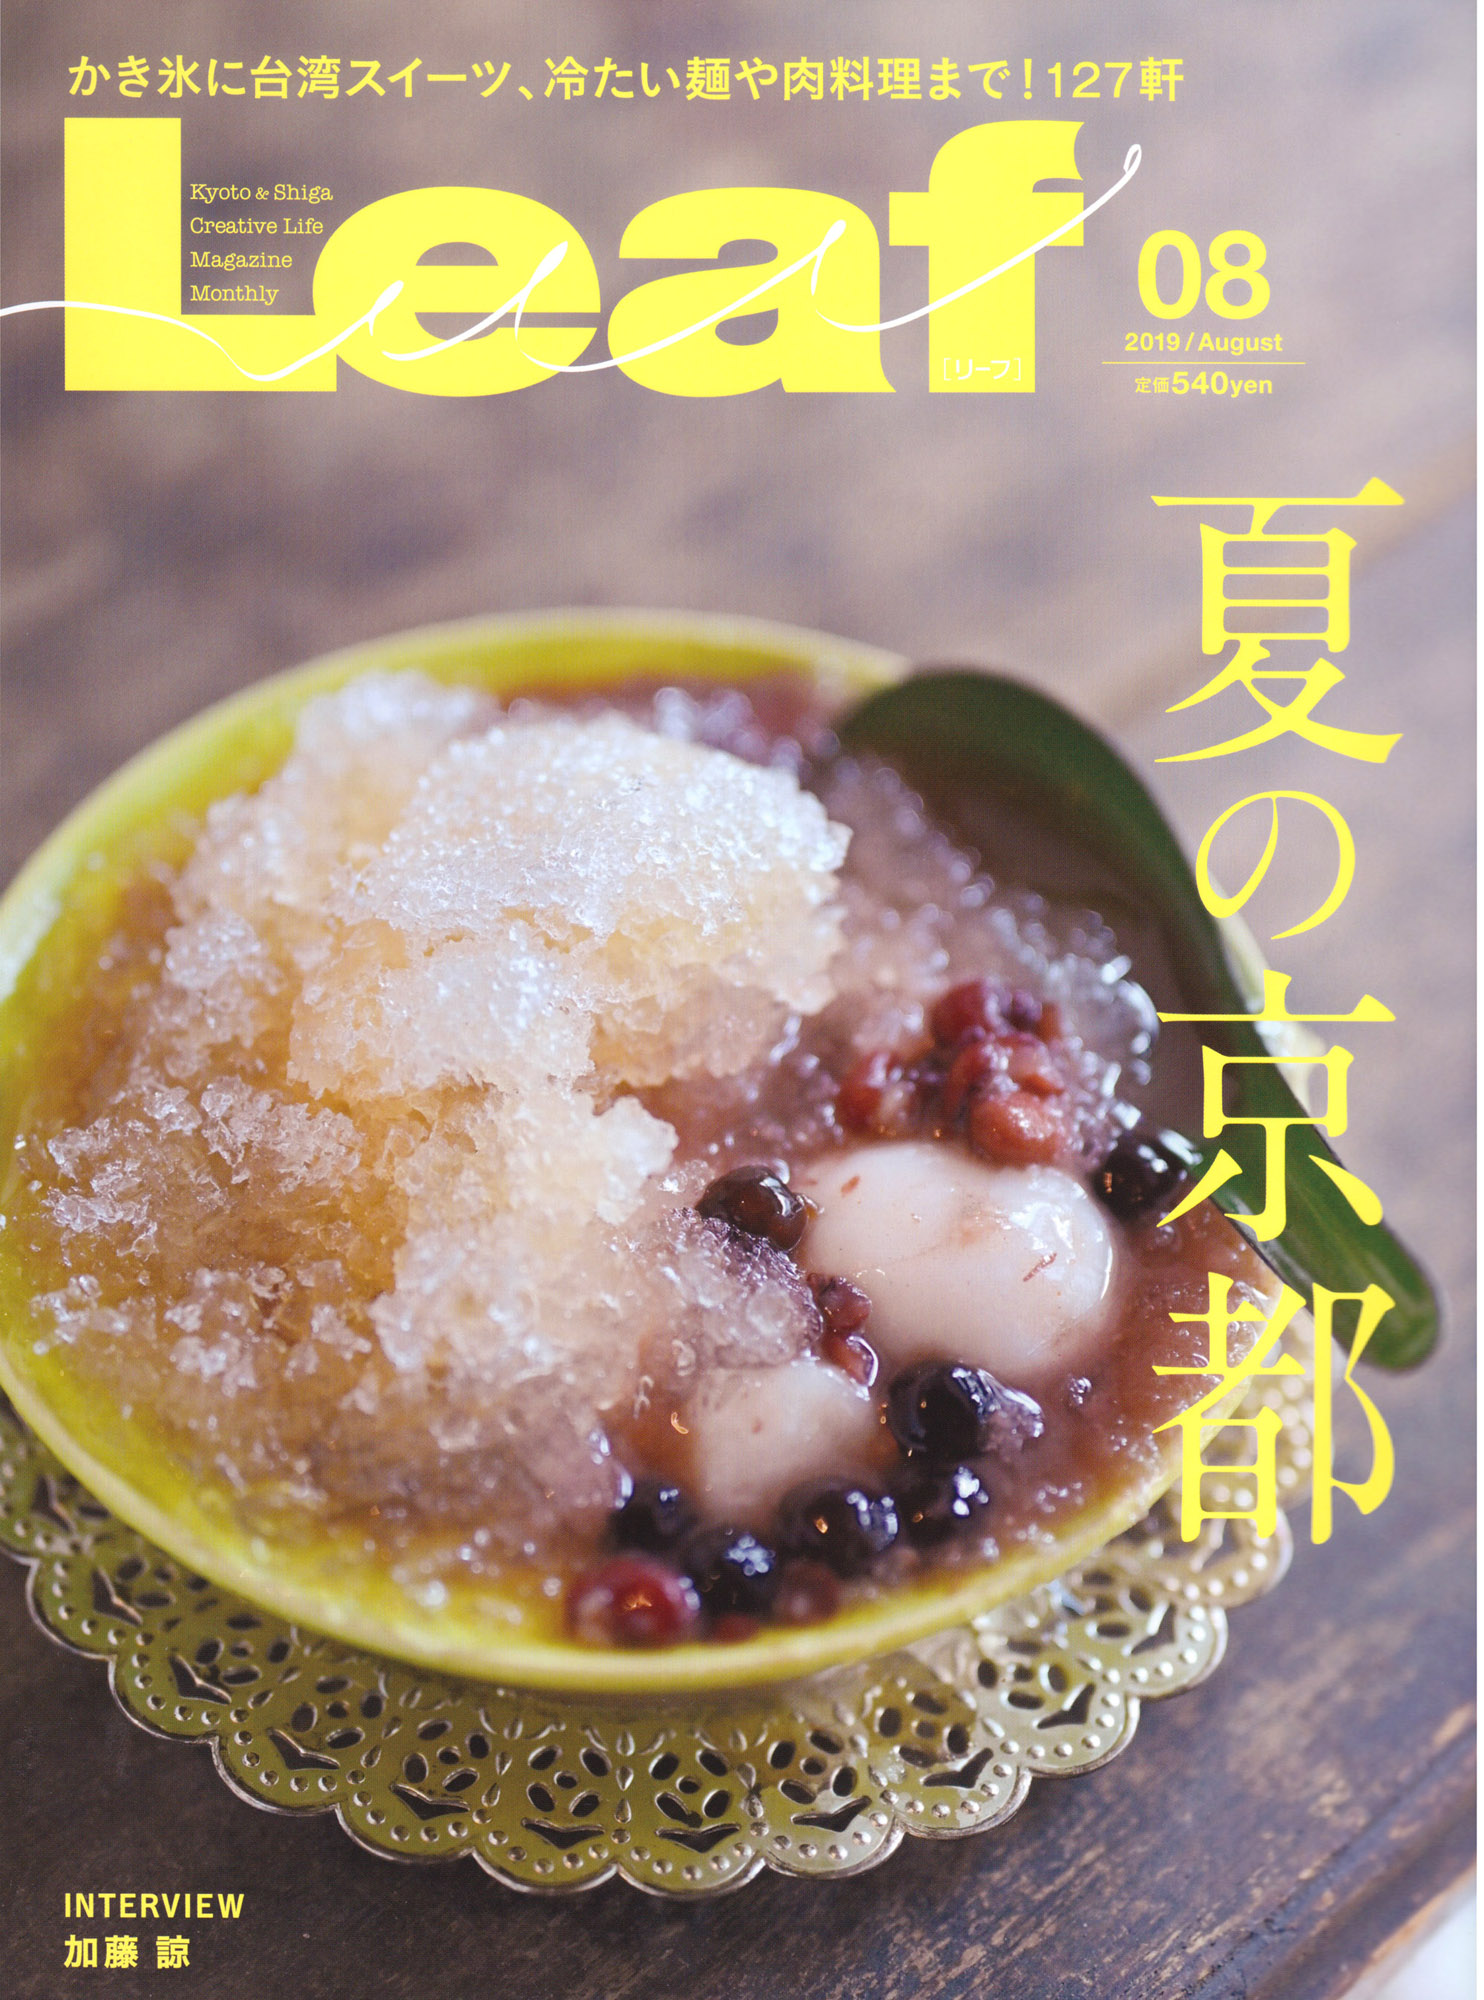 IMG: 「Leaf8月号 夏の京都特集」に掲載されました。